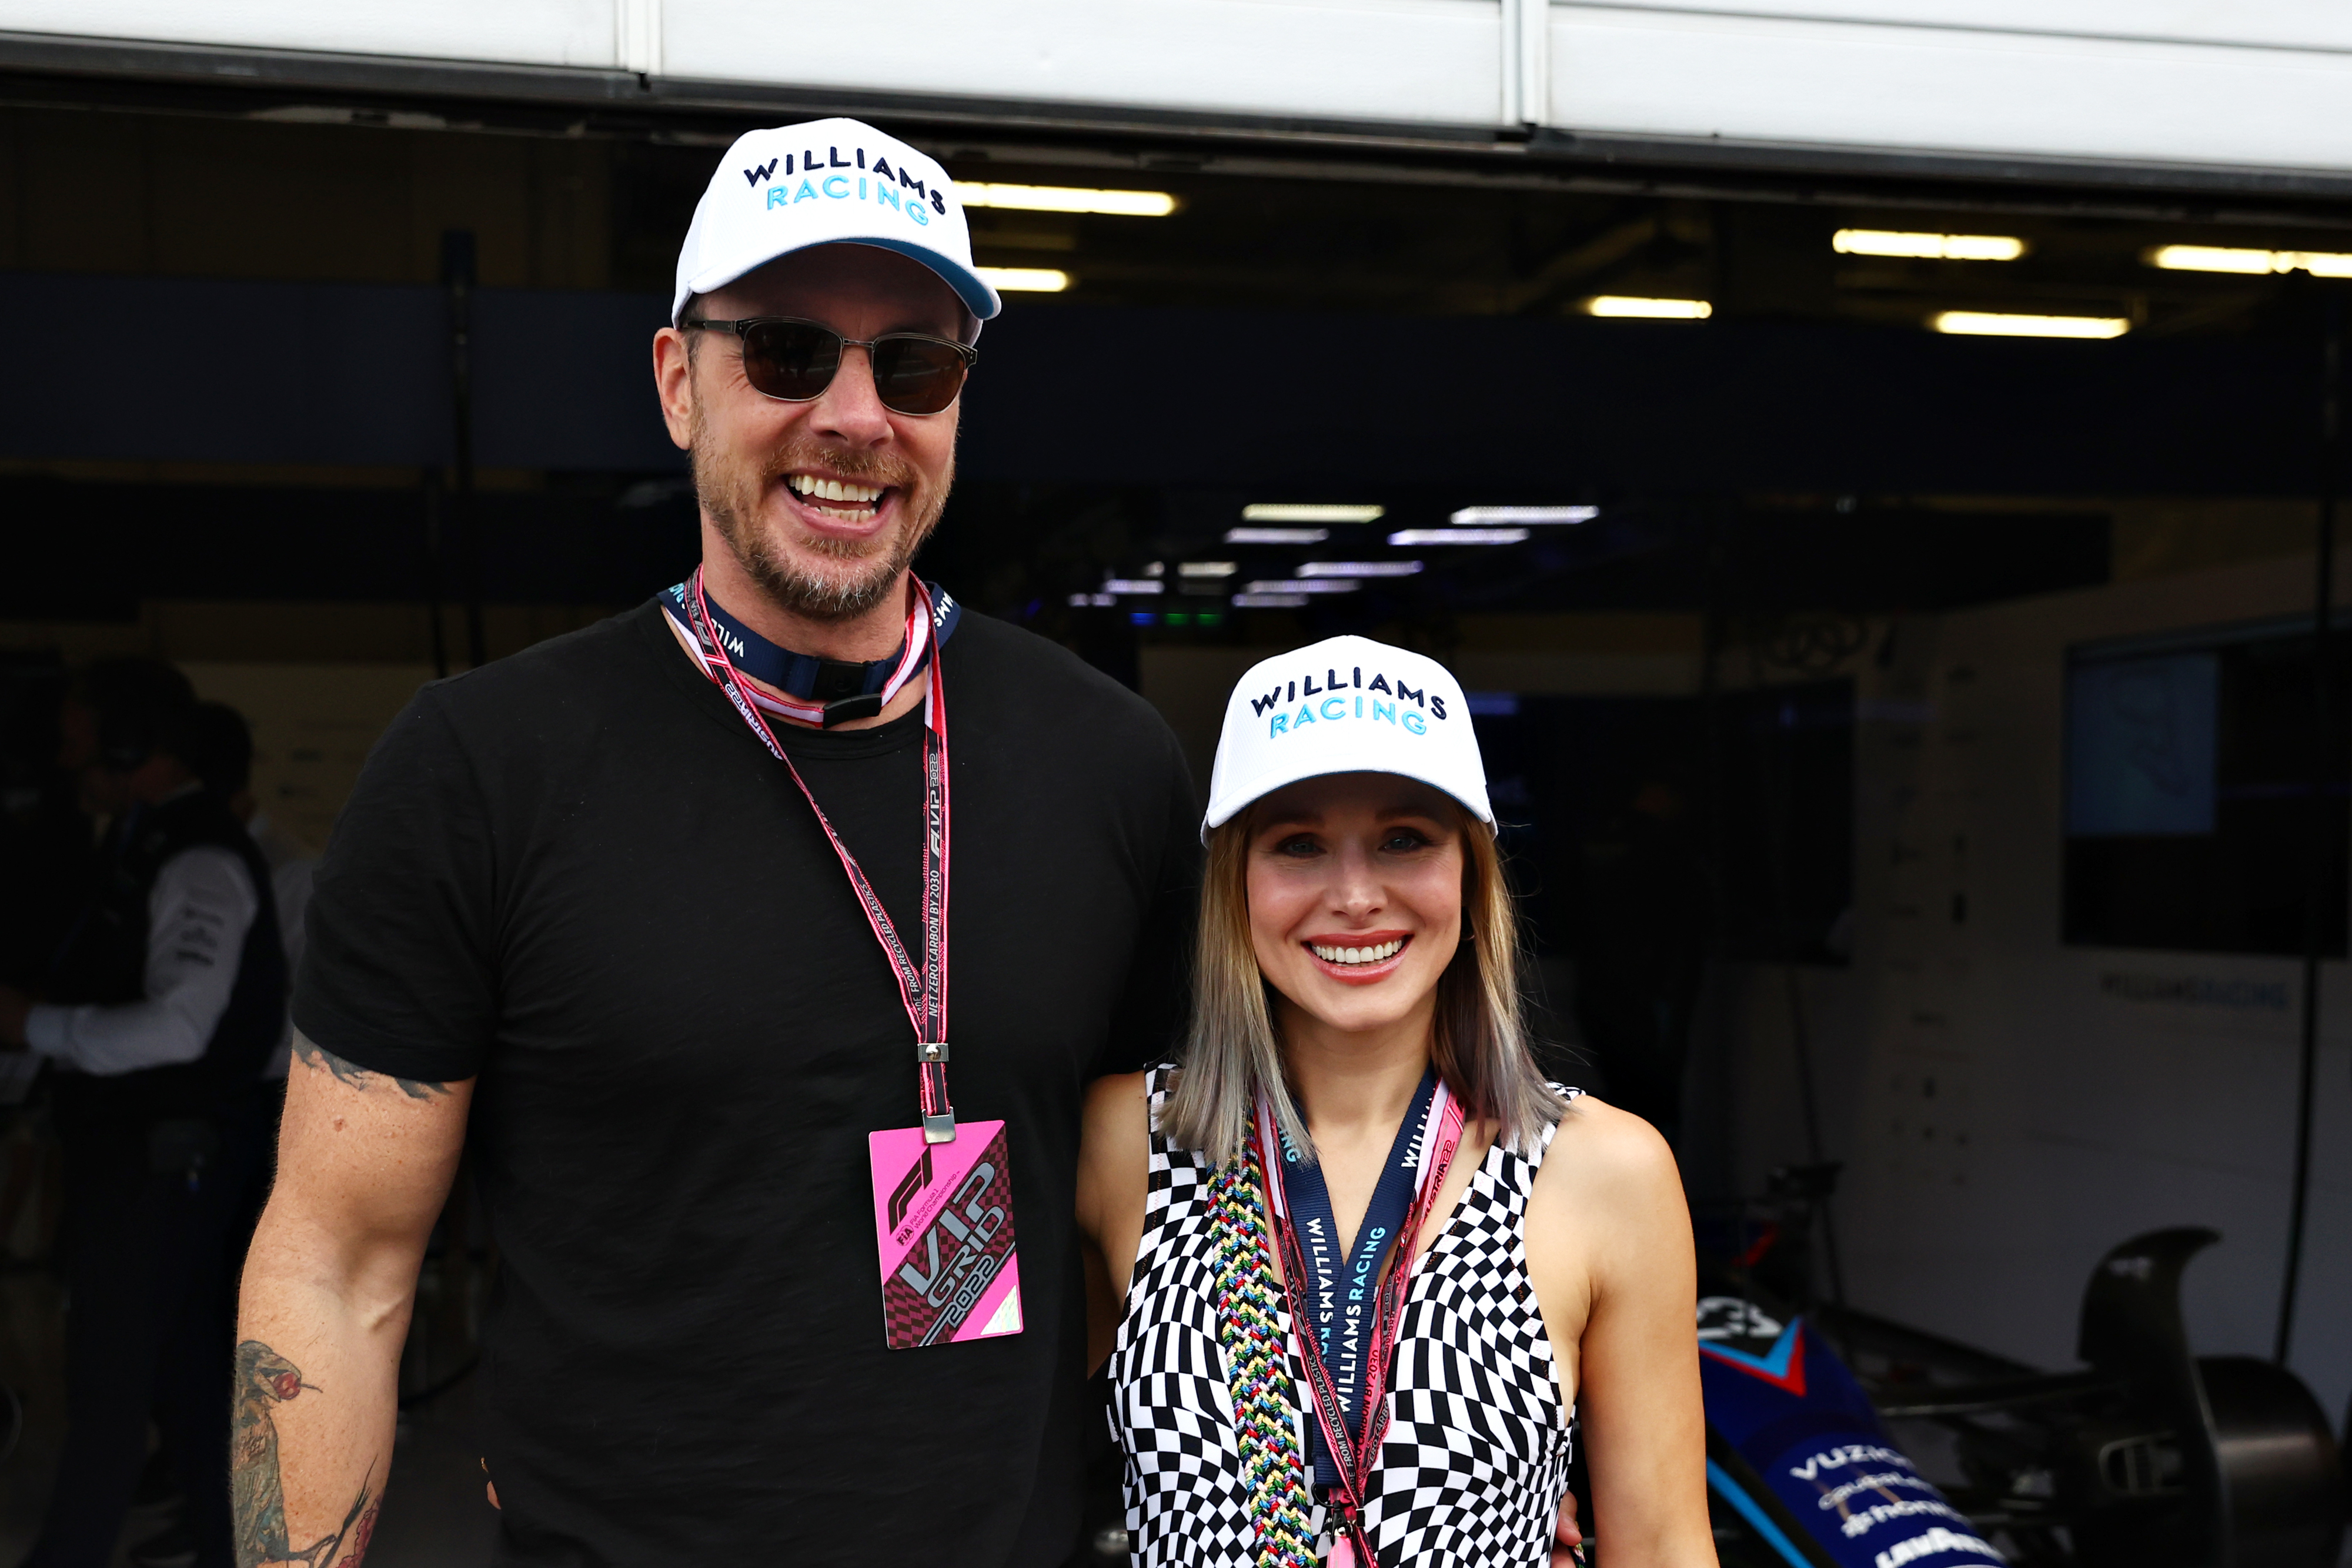 Closeup of Dax Shepard and Kristen Bell at Formula 1 race. Both are wearing. Williams Racing baseball caps